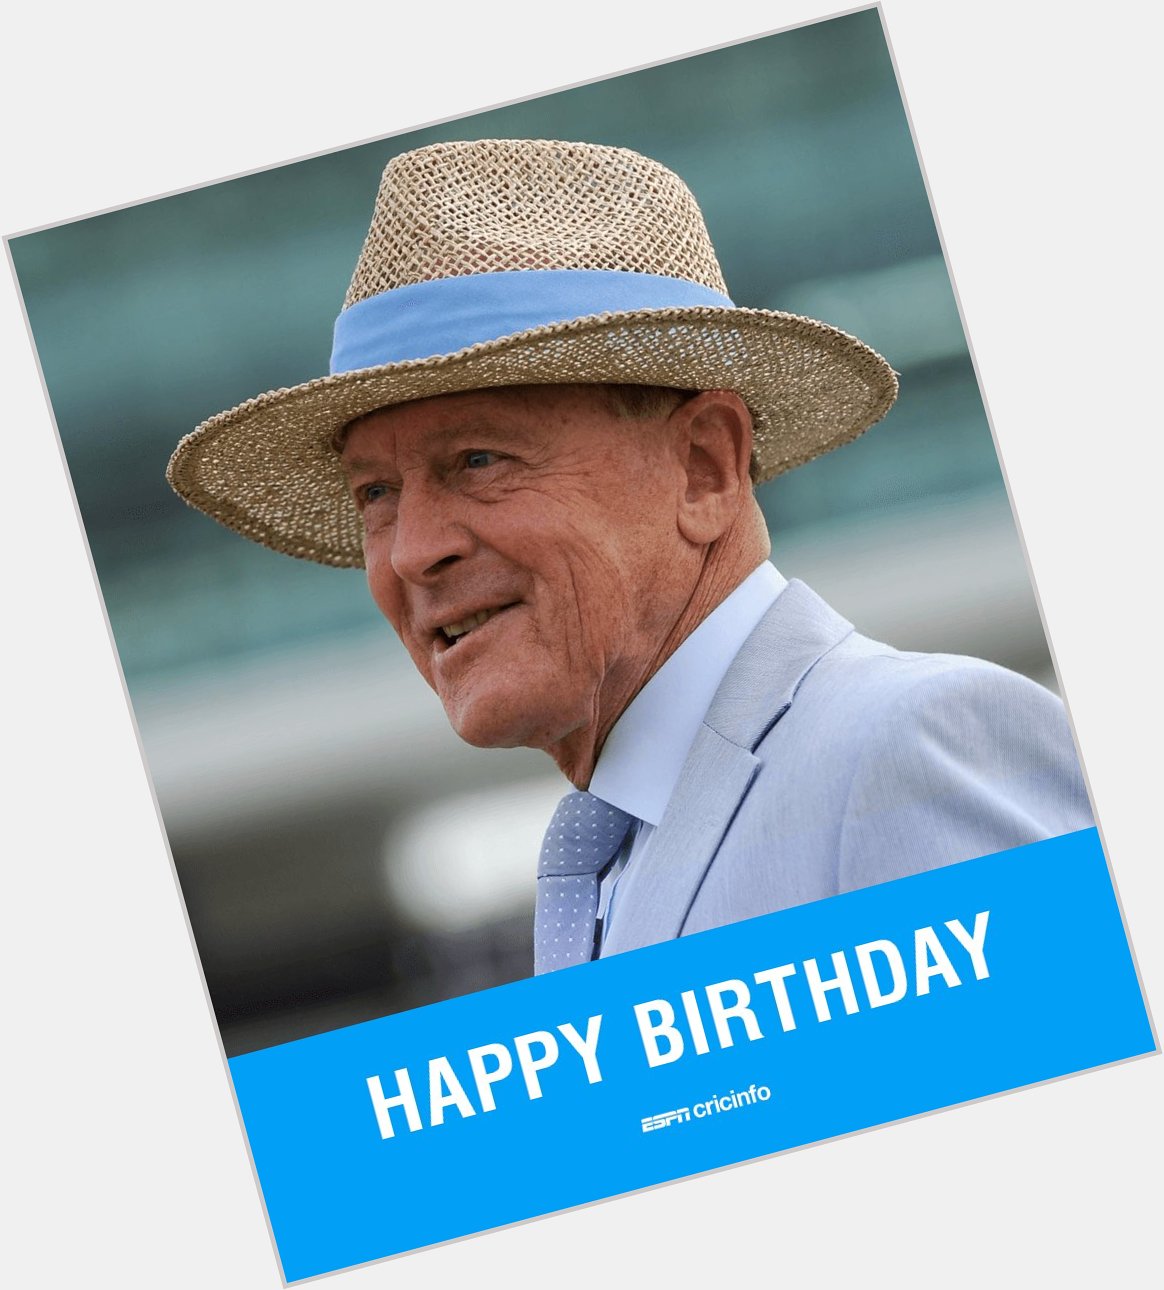 Happy birthday to England Cricketer 